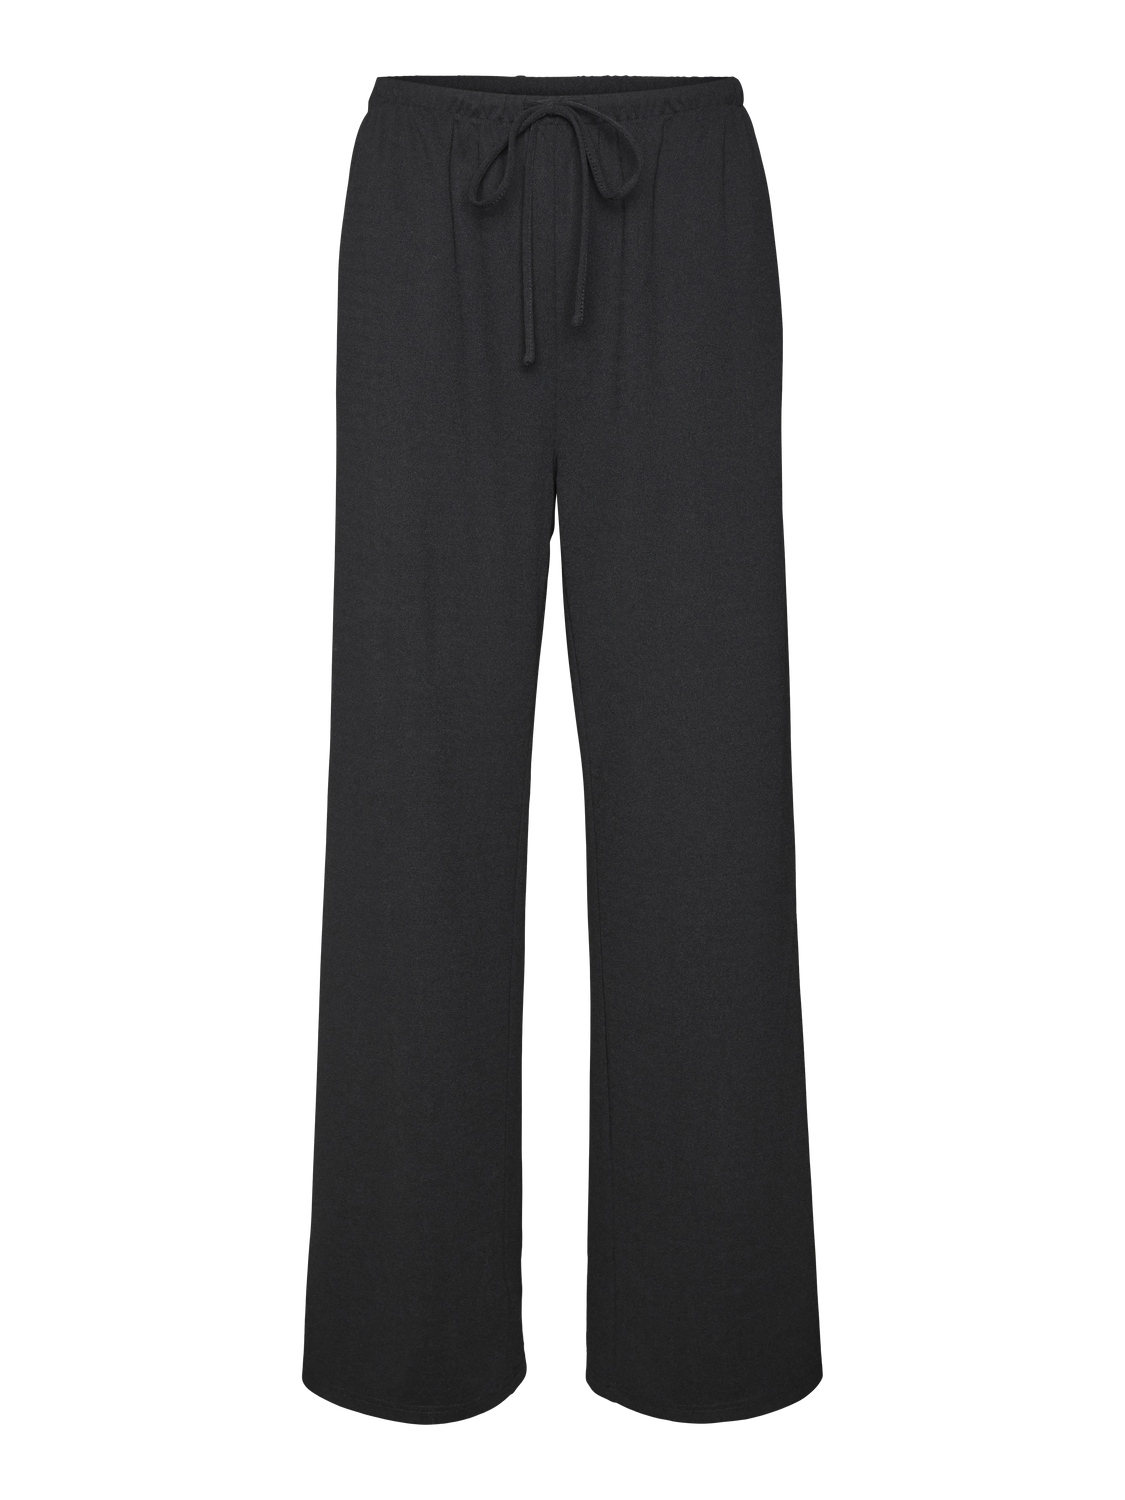 Vero Moda VMLIVA High waist Trousers -Black - 10321279